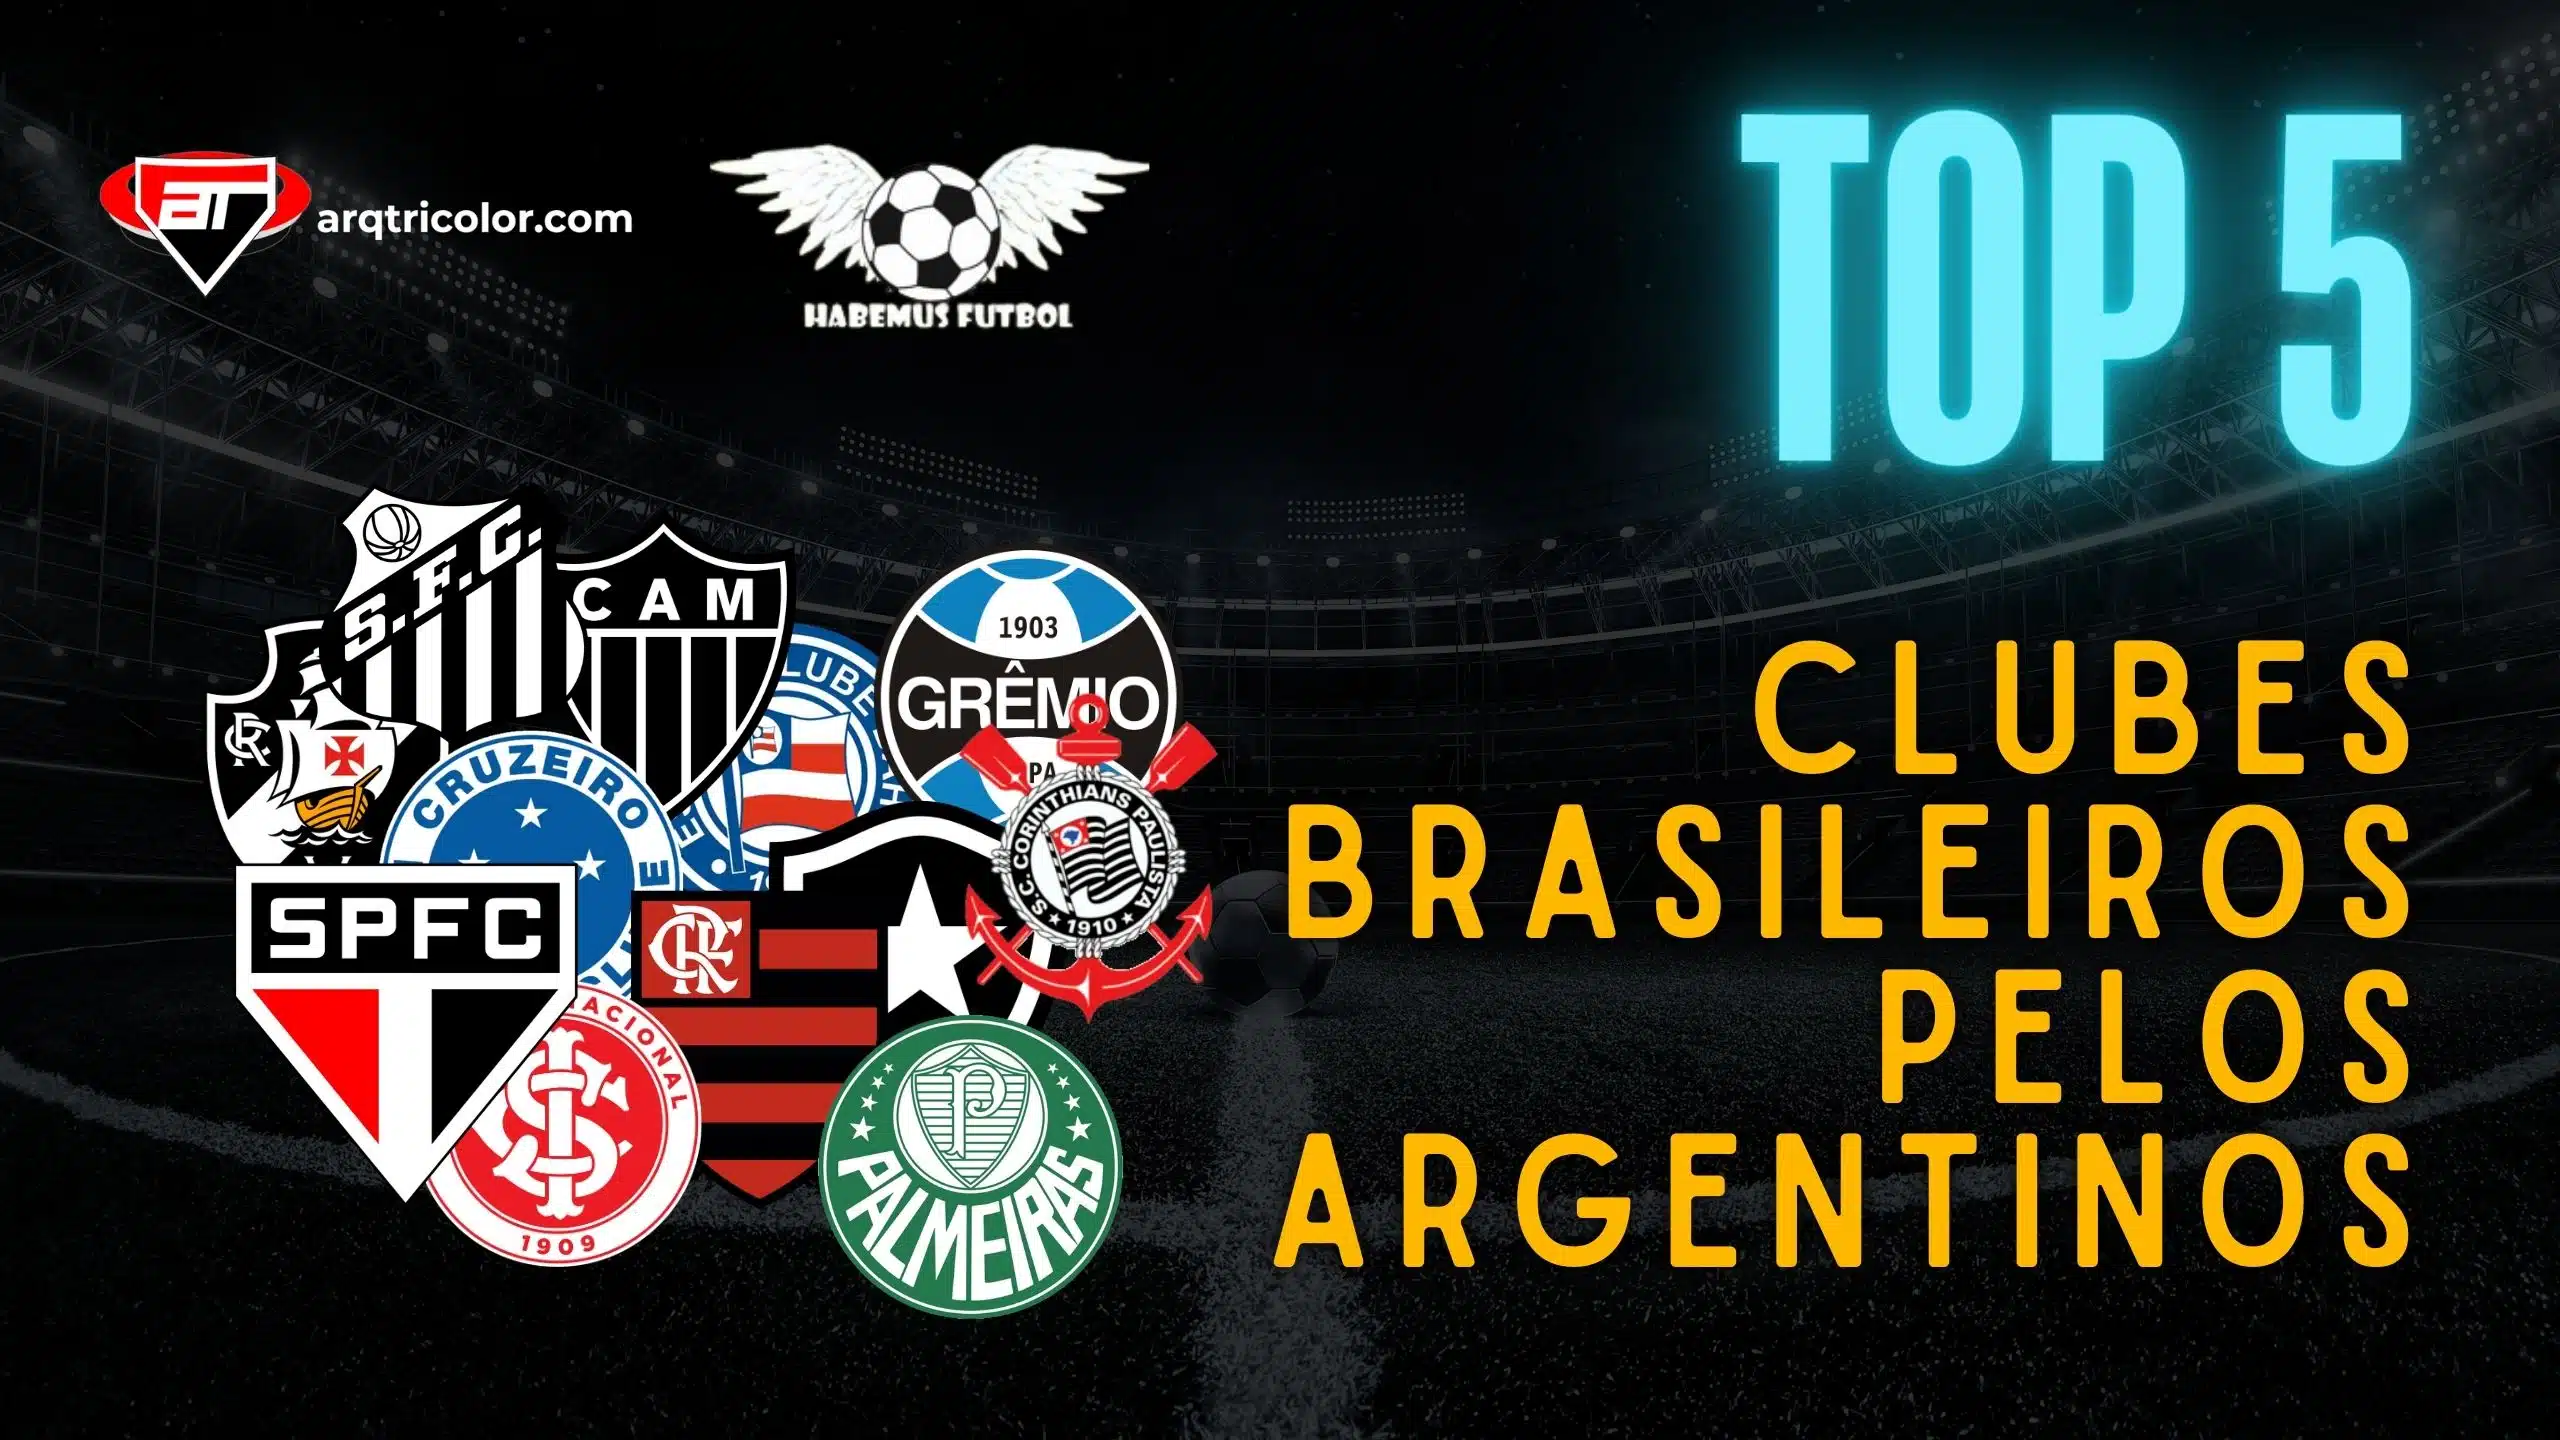 Top 5 clubes brasileiros pelos argentinos